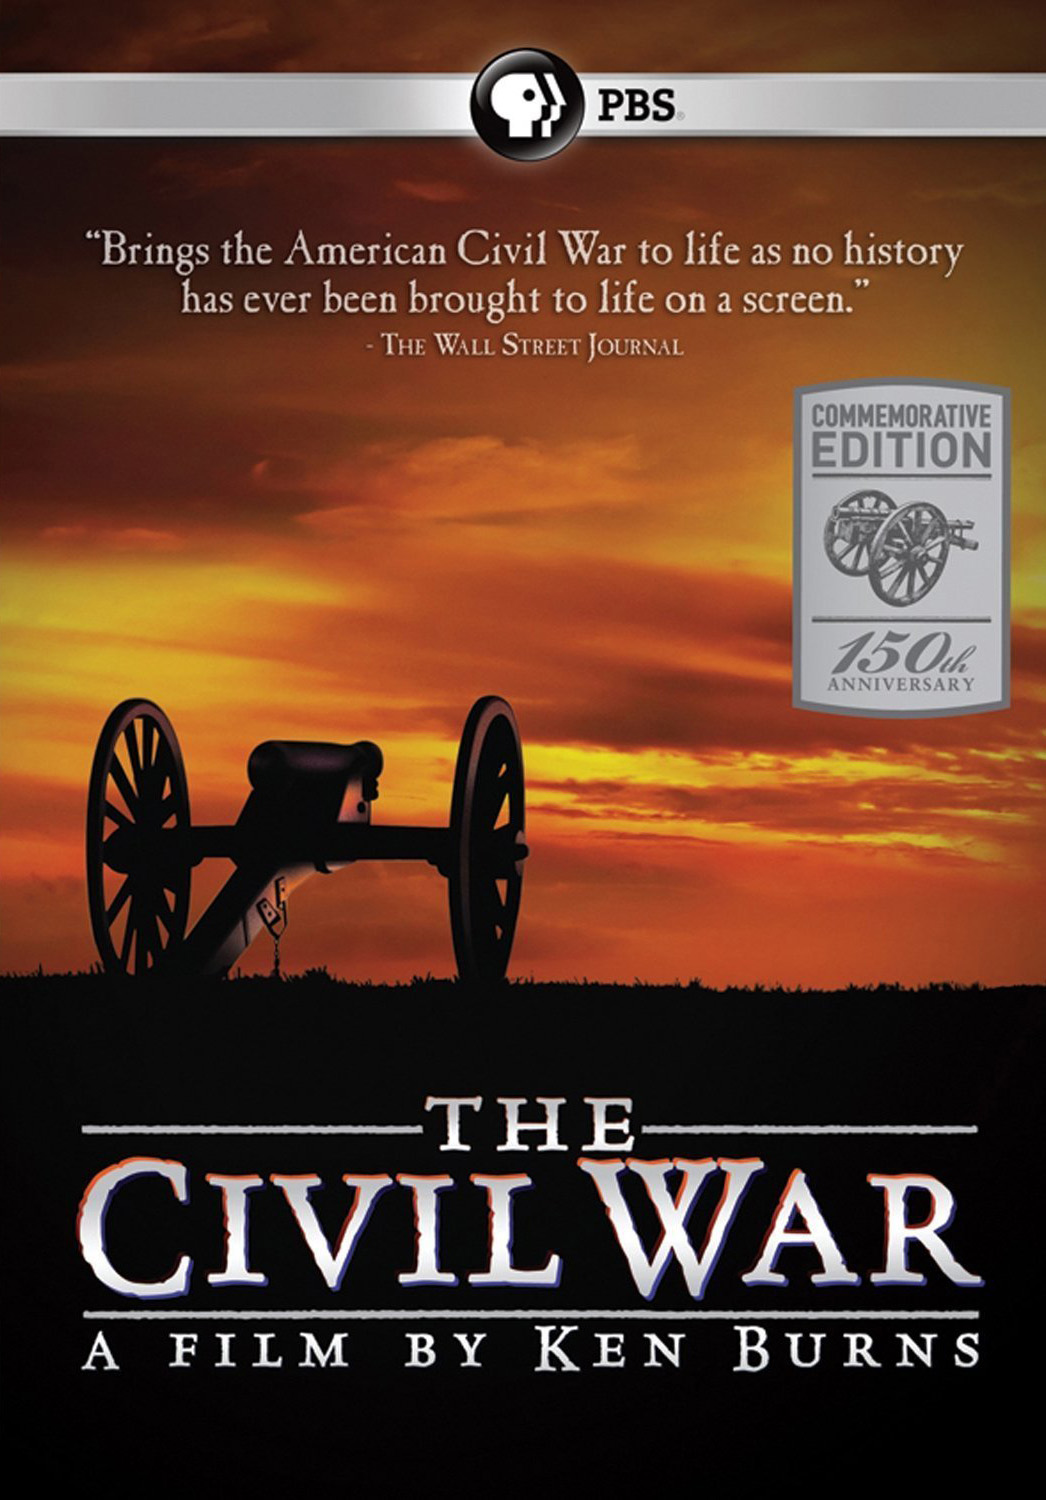 [美国内战].The.Civil.War.EP08-09.1990.BluRay.1080p.AVC.DTS-HD.MA.5.1-TTG   31.74G-2.jpg